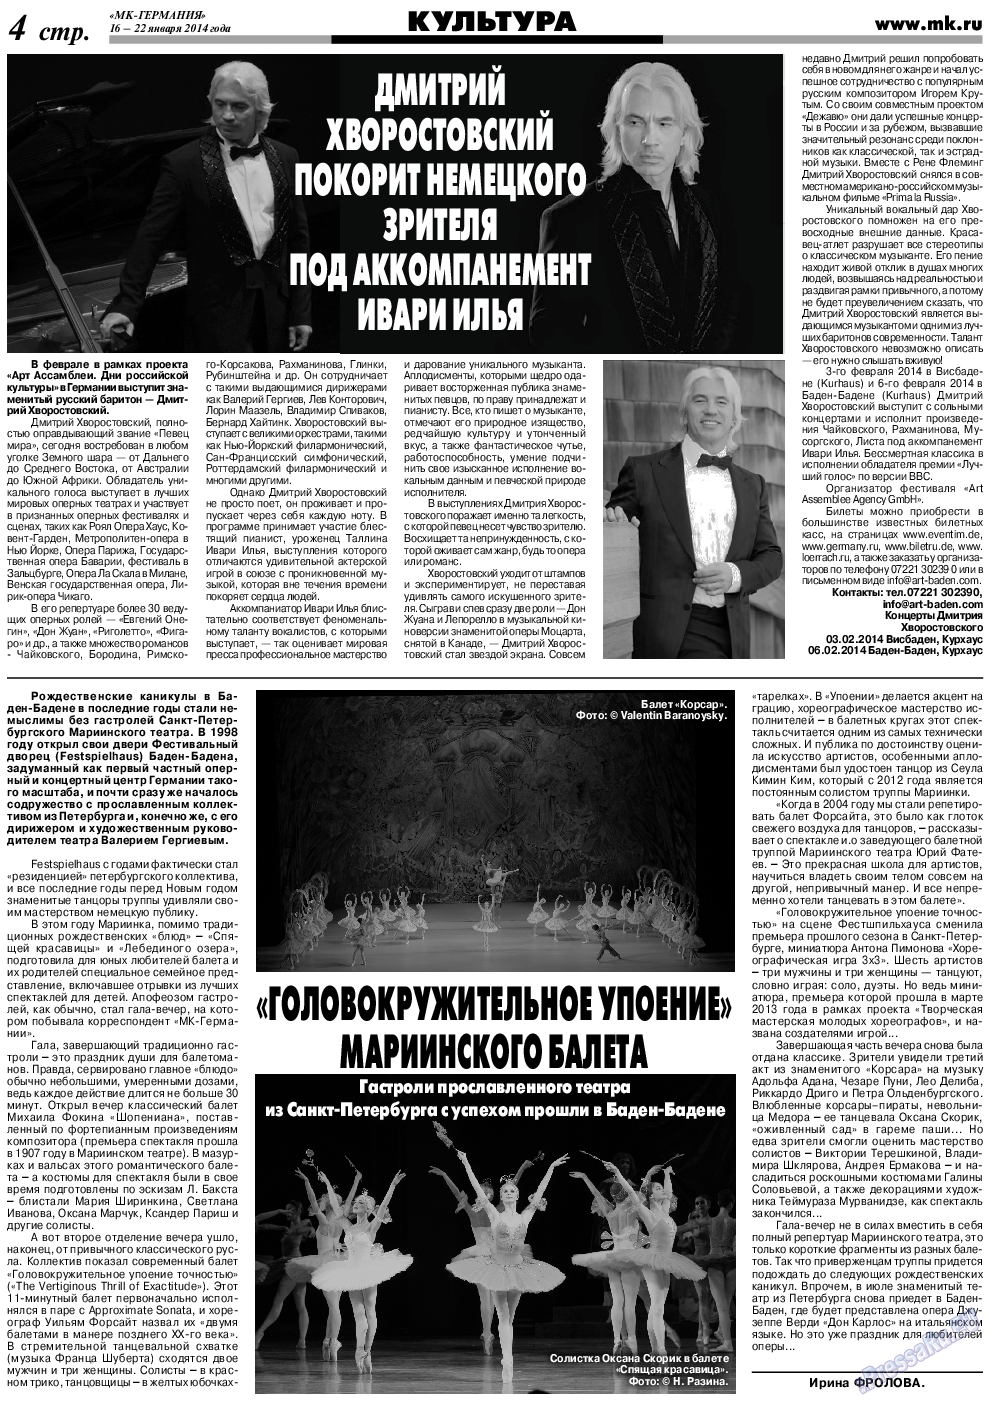 МК-Германия, газета. 2014 №3 стр.4